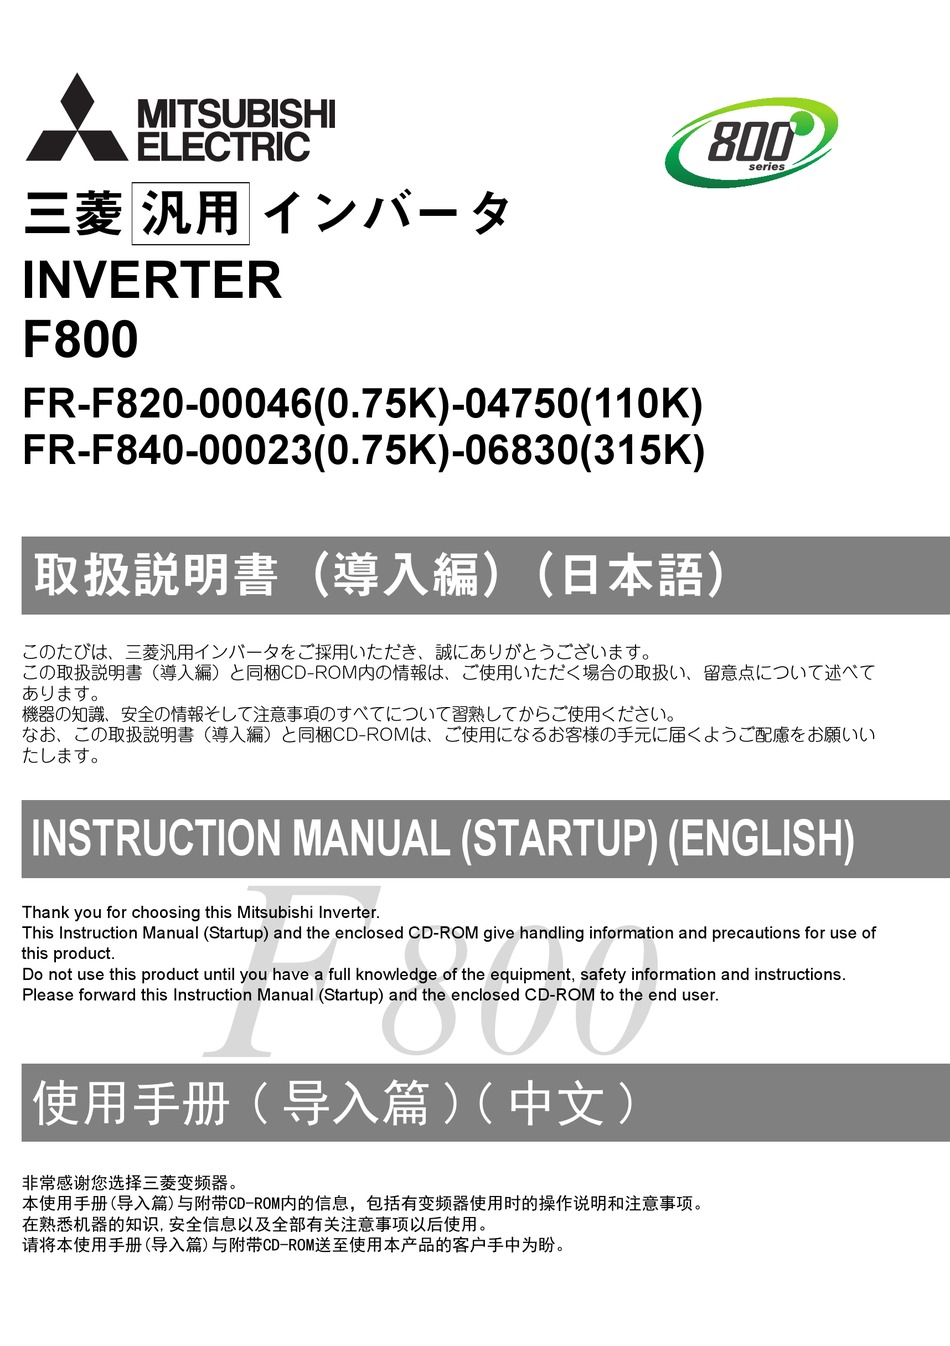 MITSUBISHI ELECTRIC FR-F820-00046 INSTRUCTION MANUAL Pdf Download